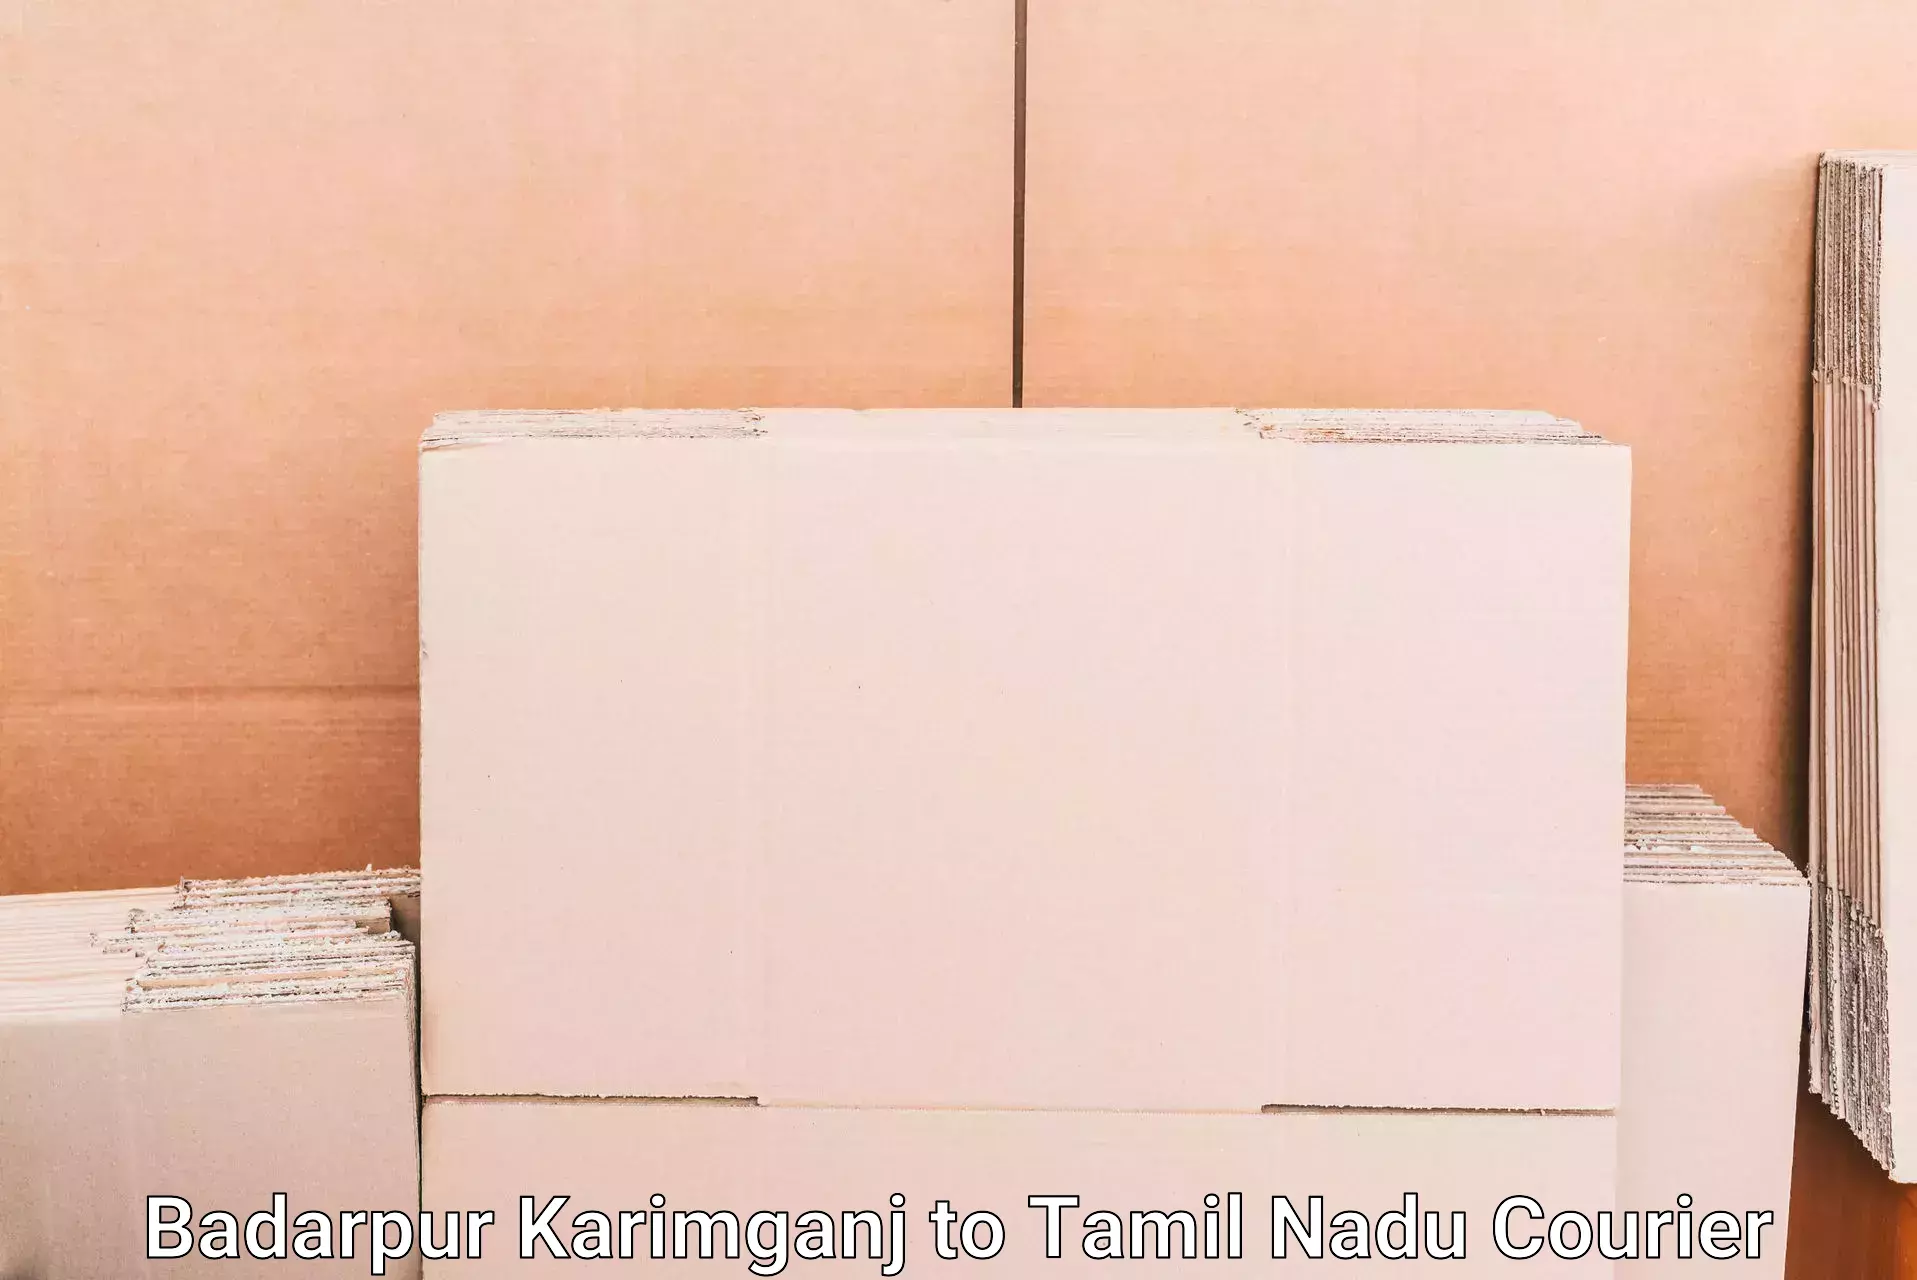 Luggage shipment specialists Badarpur Karimganj to Vedasandur